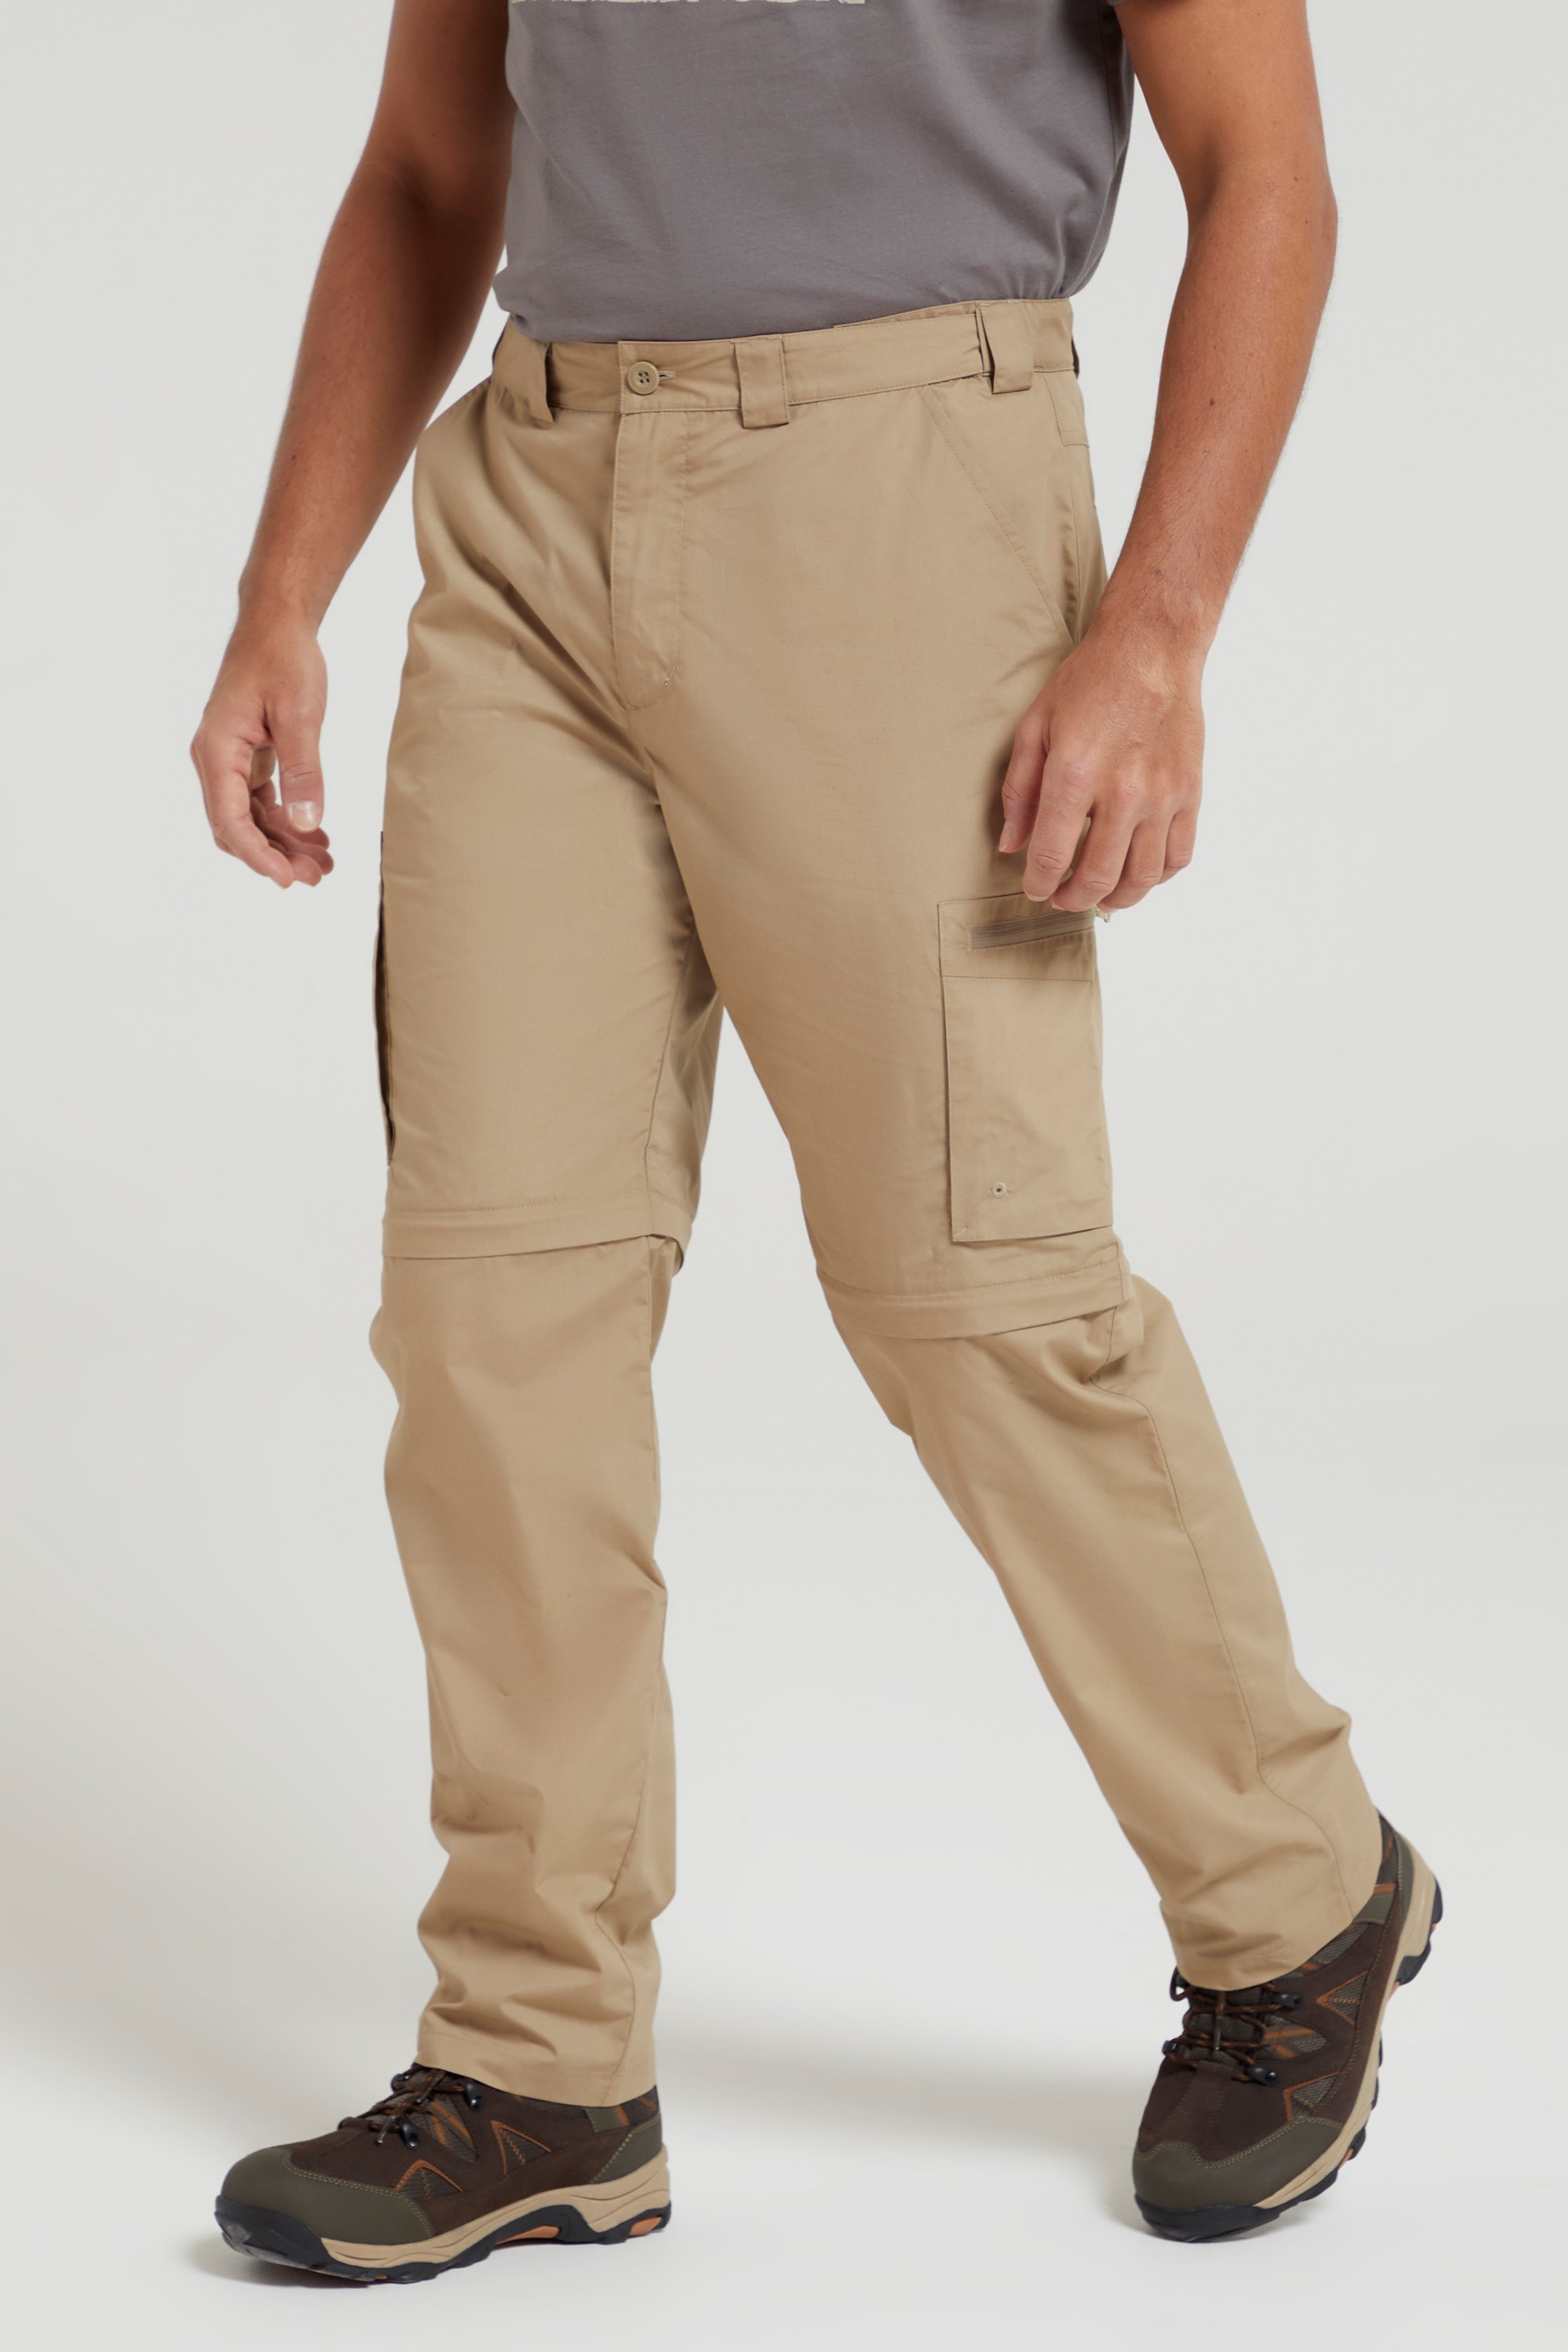 Mountain Warehouse Trek Mens Zip Off Pants - Beige | Size W38